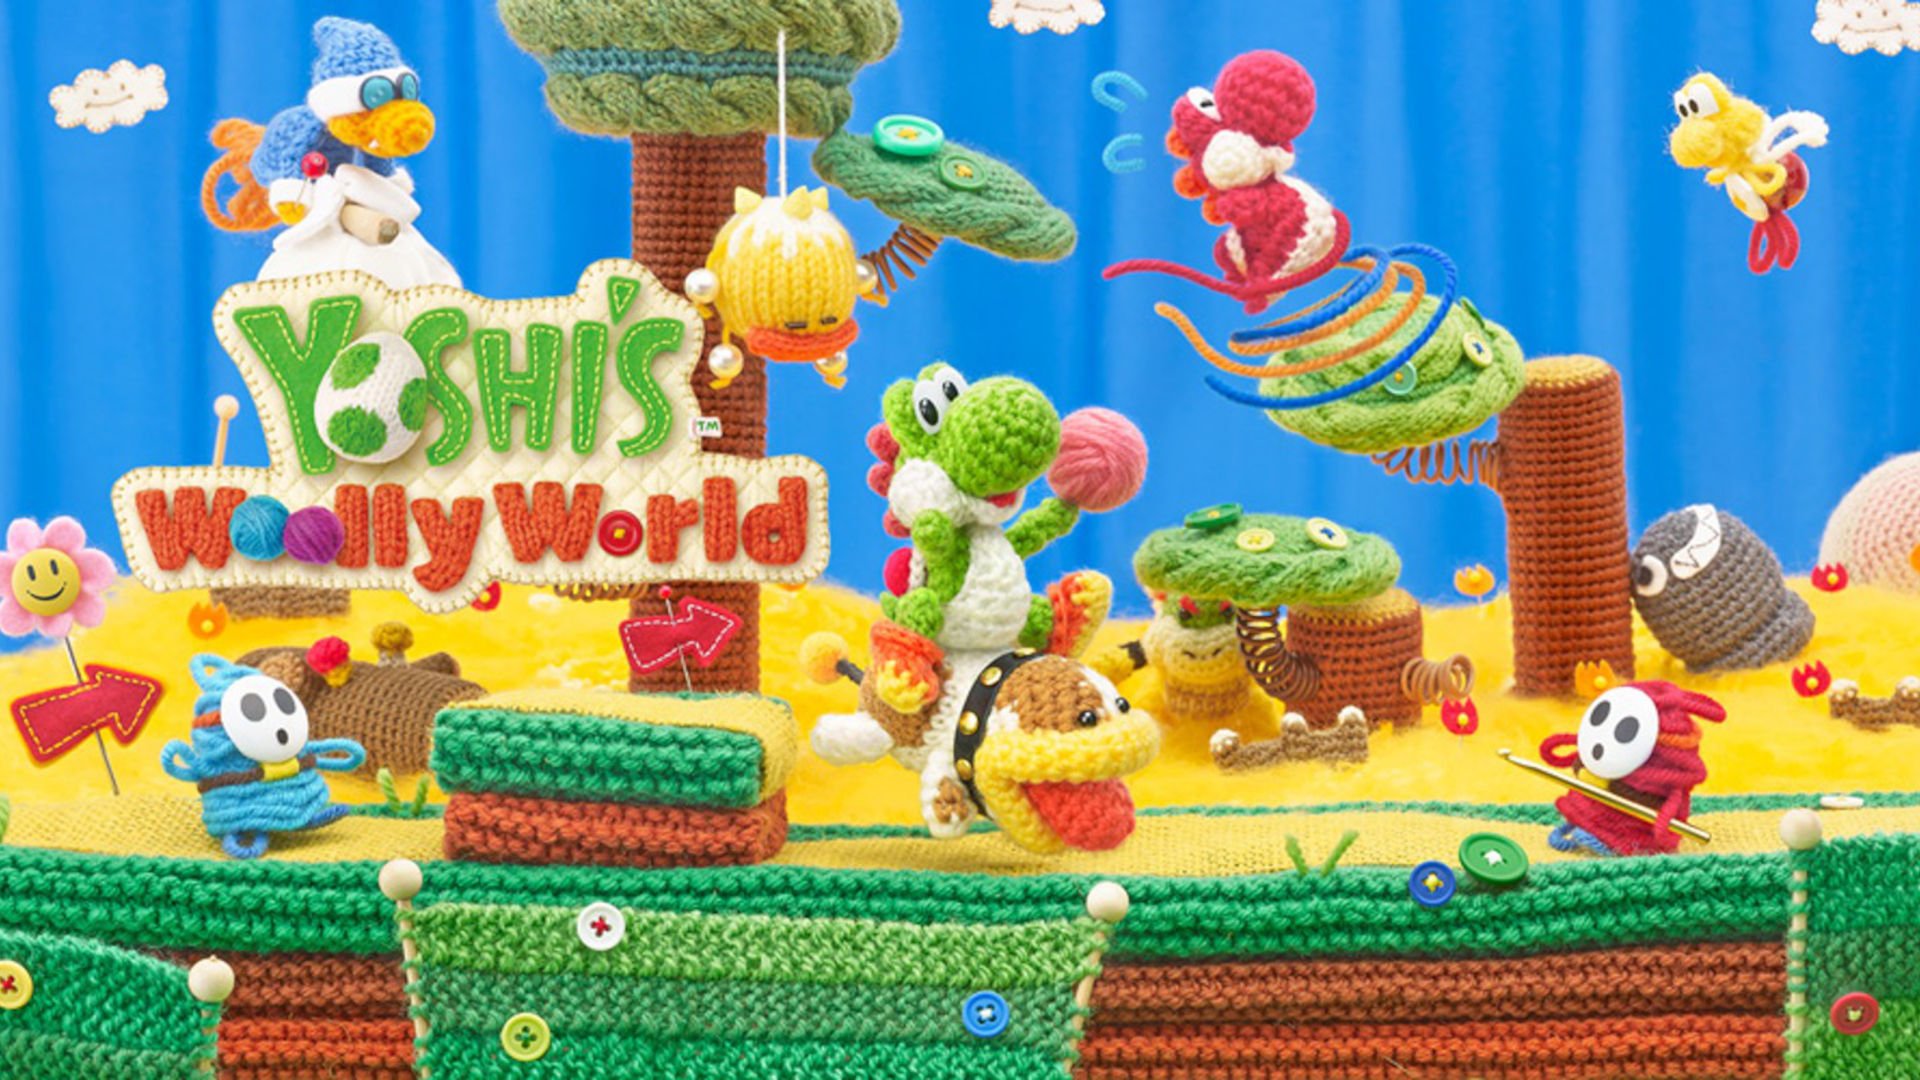 Nintendo's Yoshi's Woolly World official artwork depicting Yoshi riding a dog.